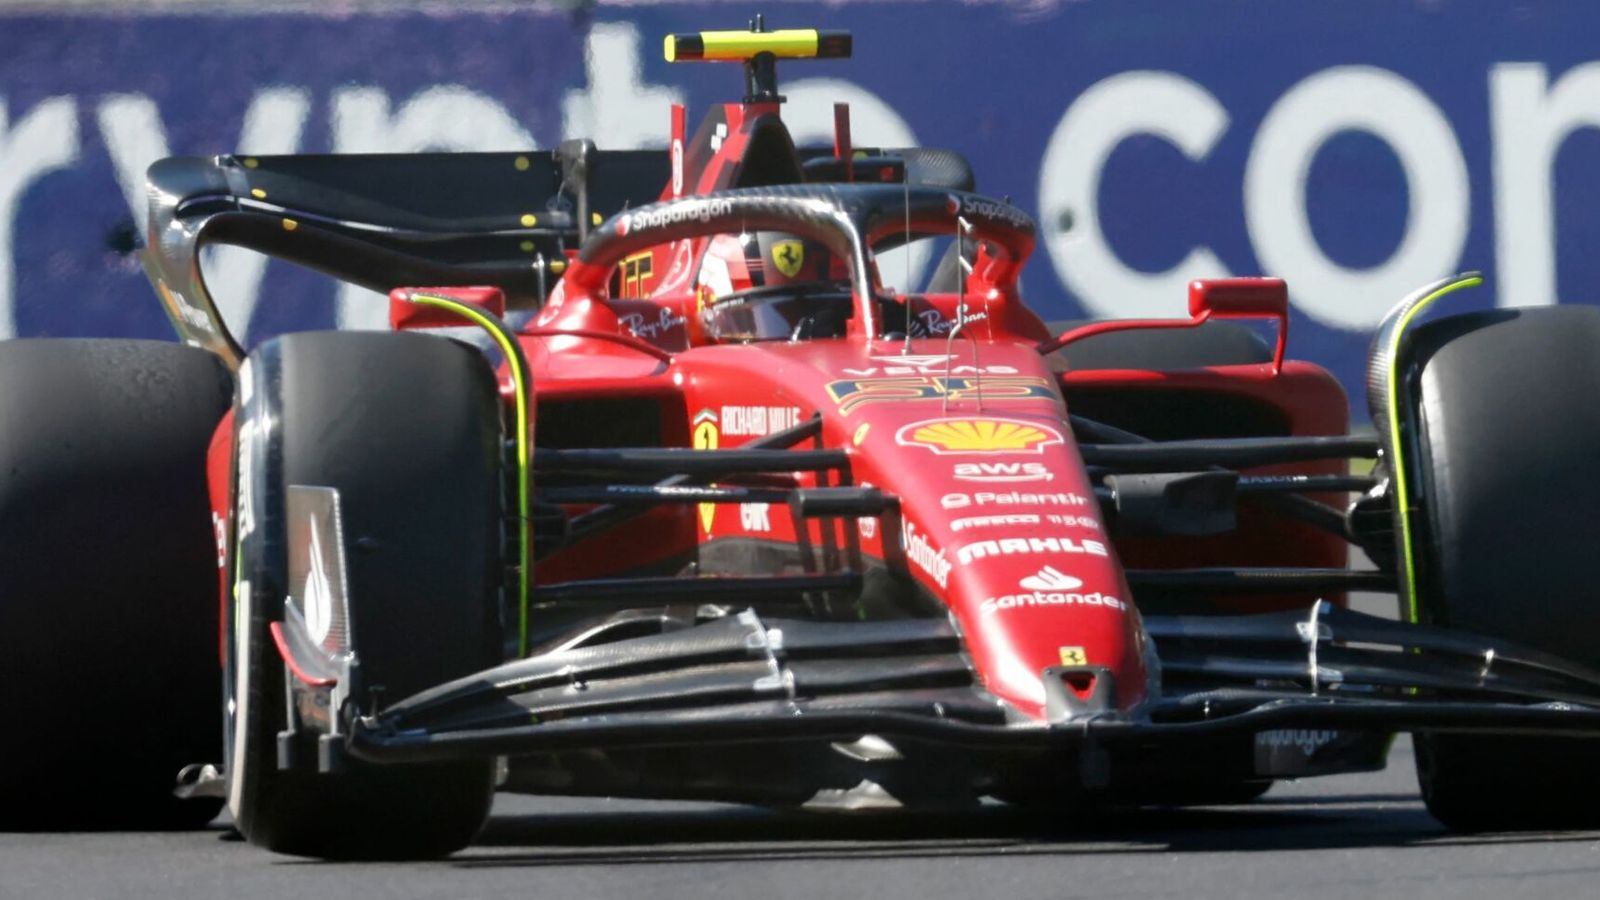 Gran Premio de Australia: Carlos Sainz lidera la carga de Ferrari en la primera práctica, Sebastian Vettel se descompone en el regreso